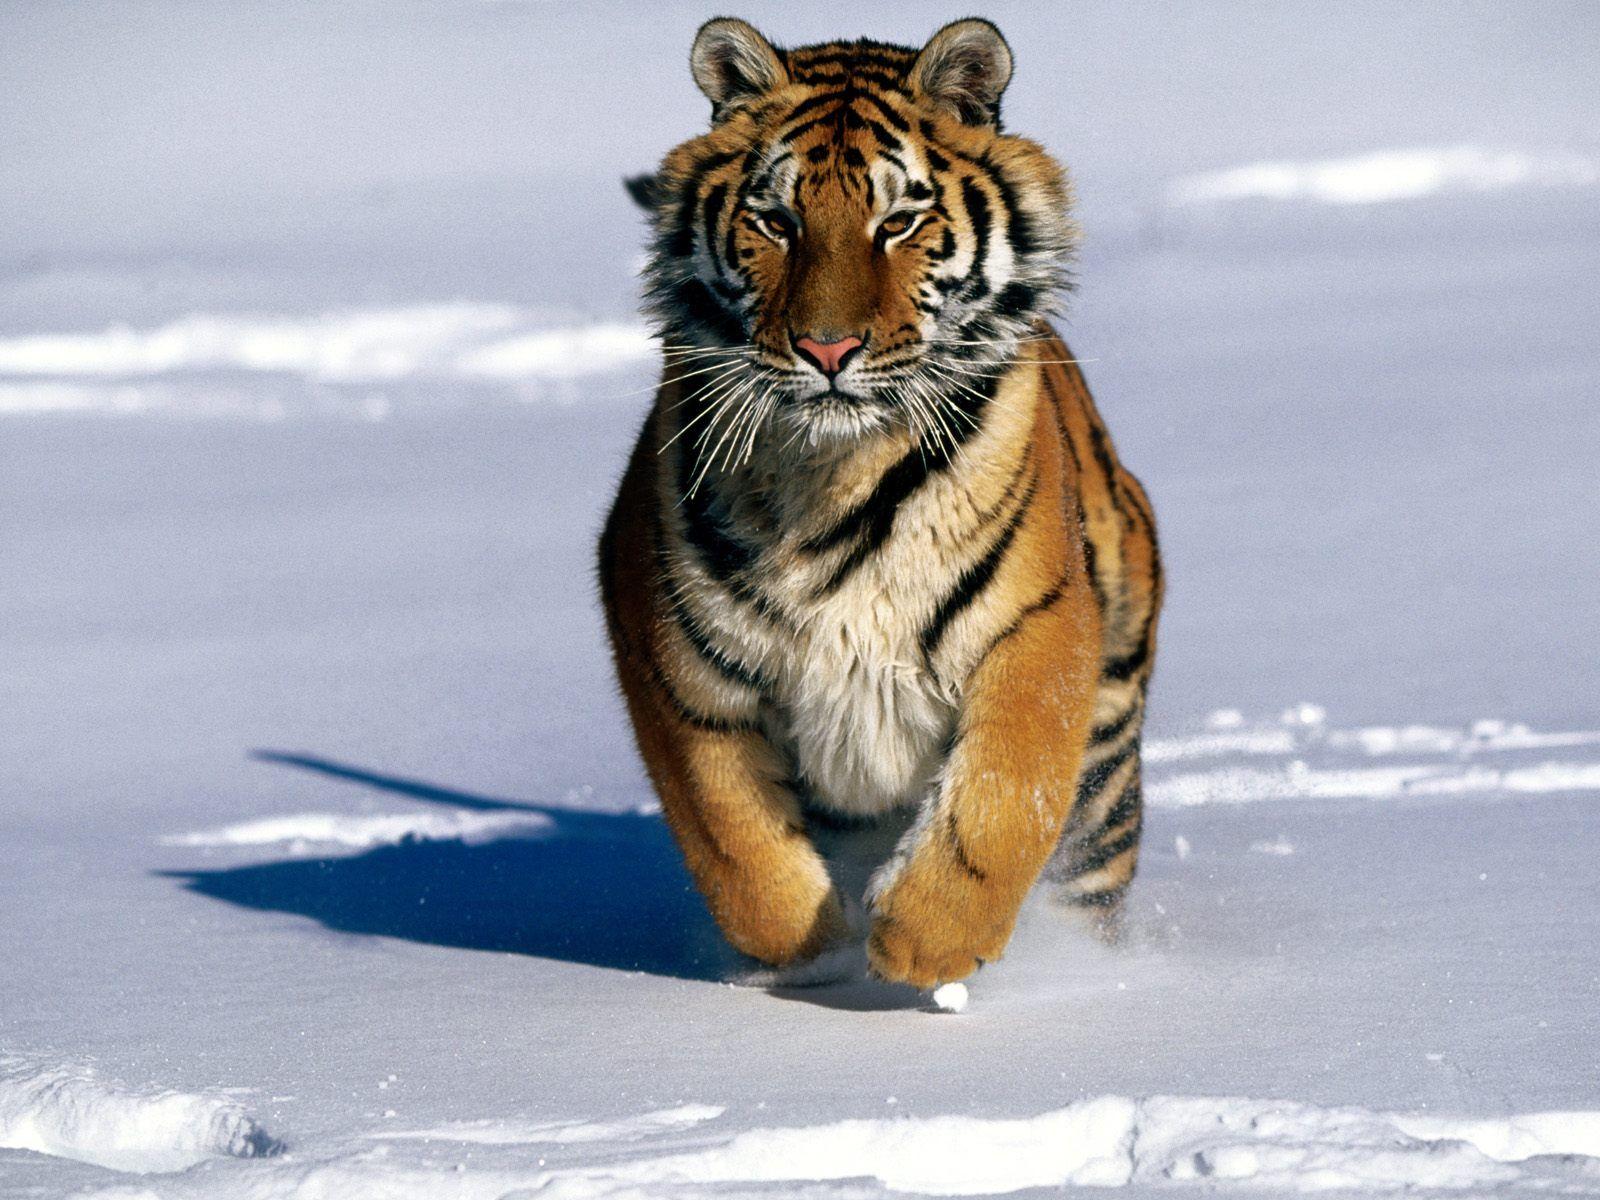 Amur tiger wallpaper